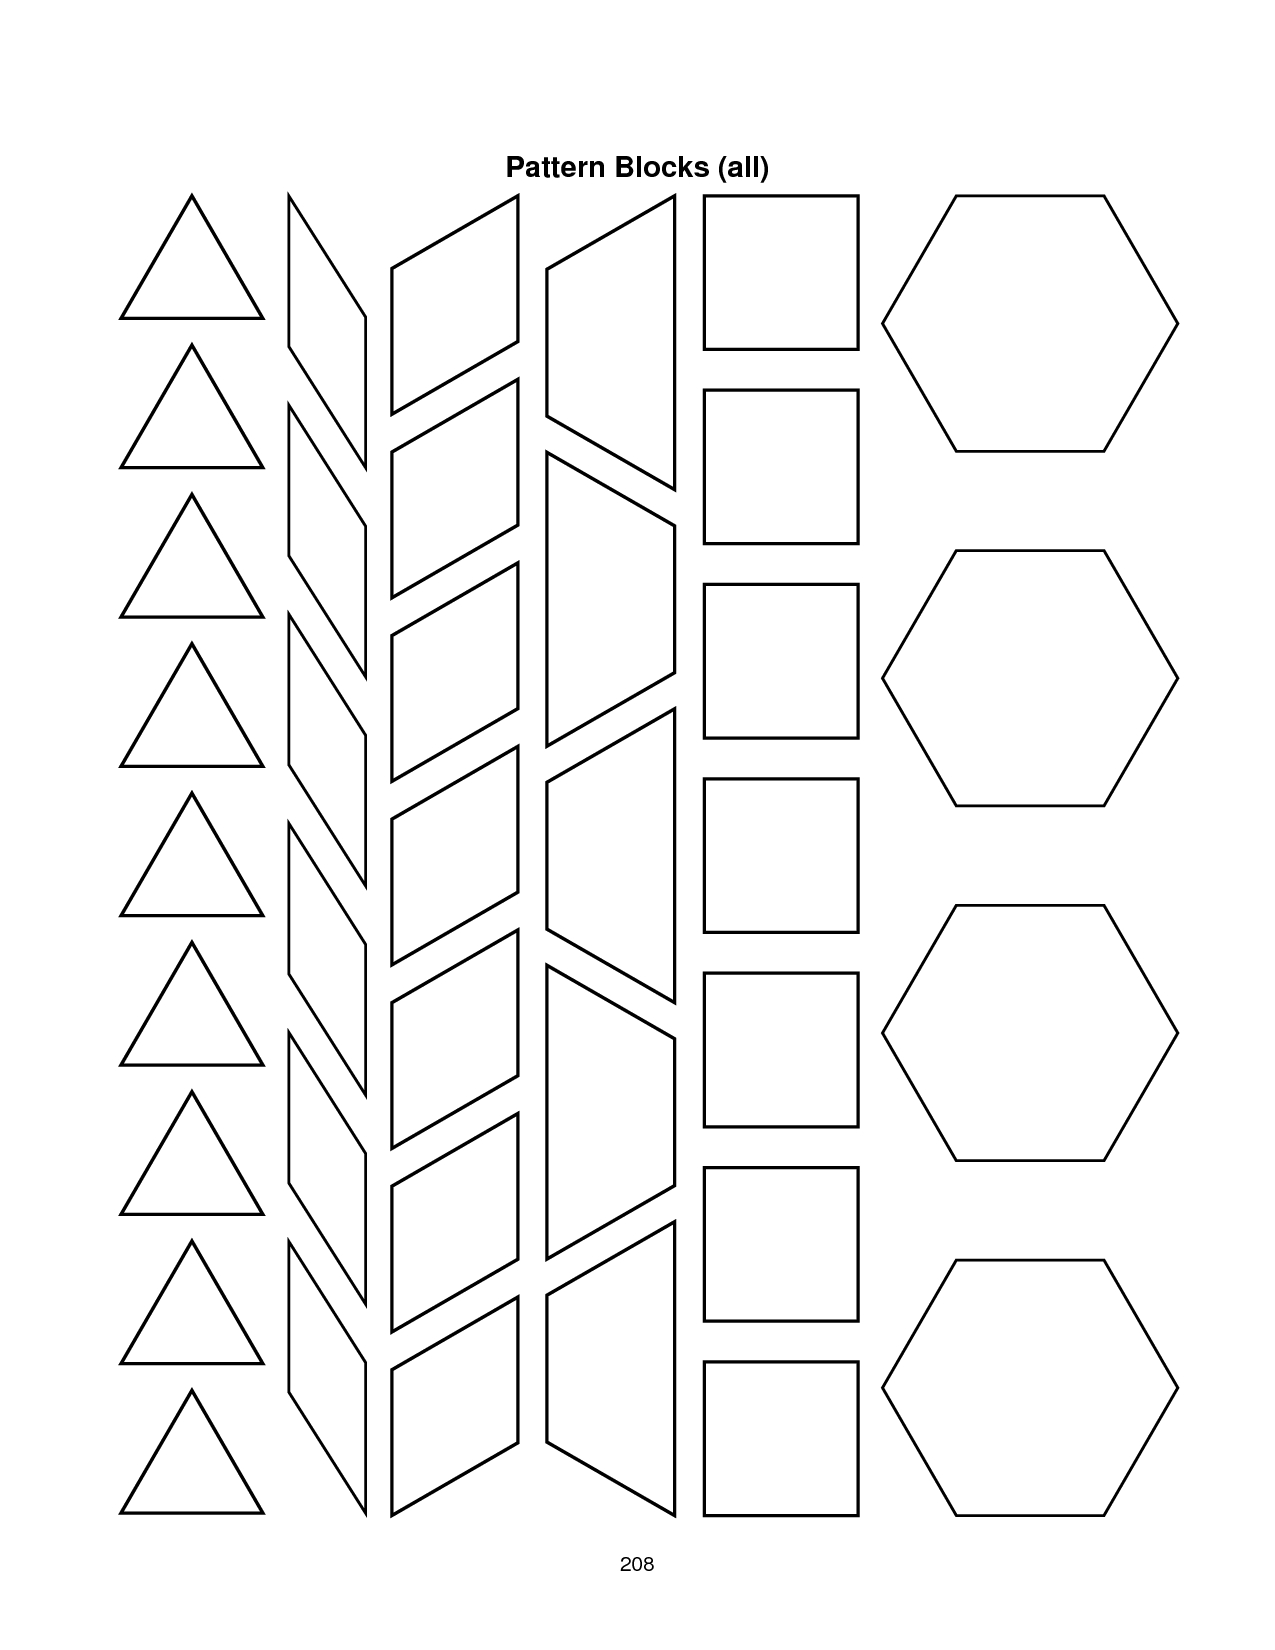 28 Images Of Blank Alphabet Pattern Block Template | Migapps Intended For Blank Pattern Block Templates